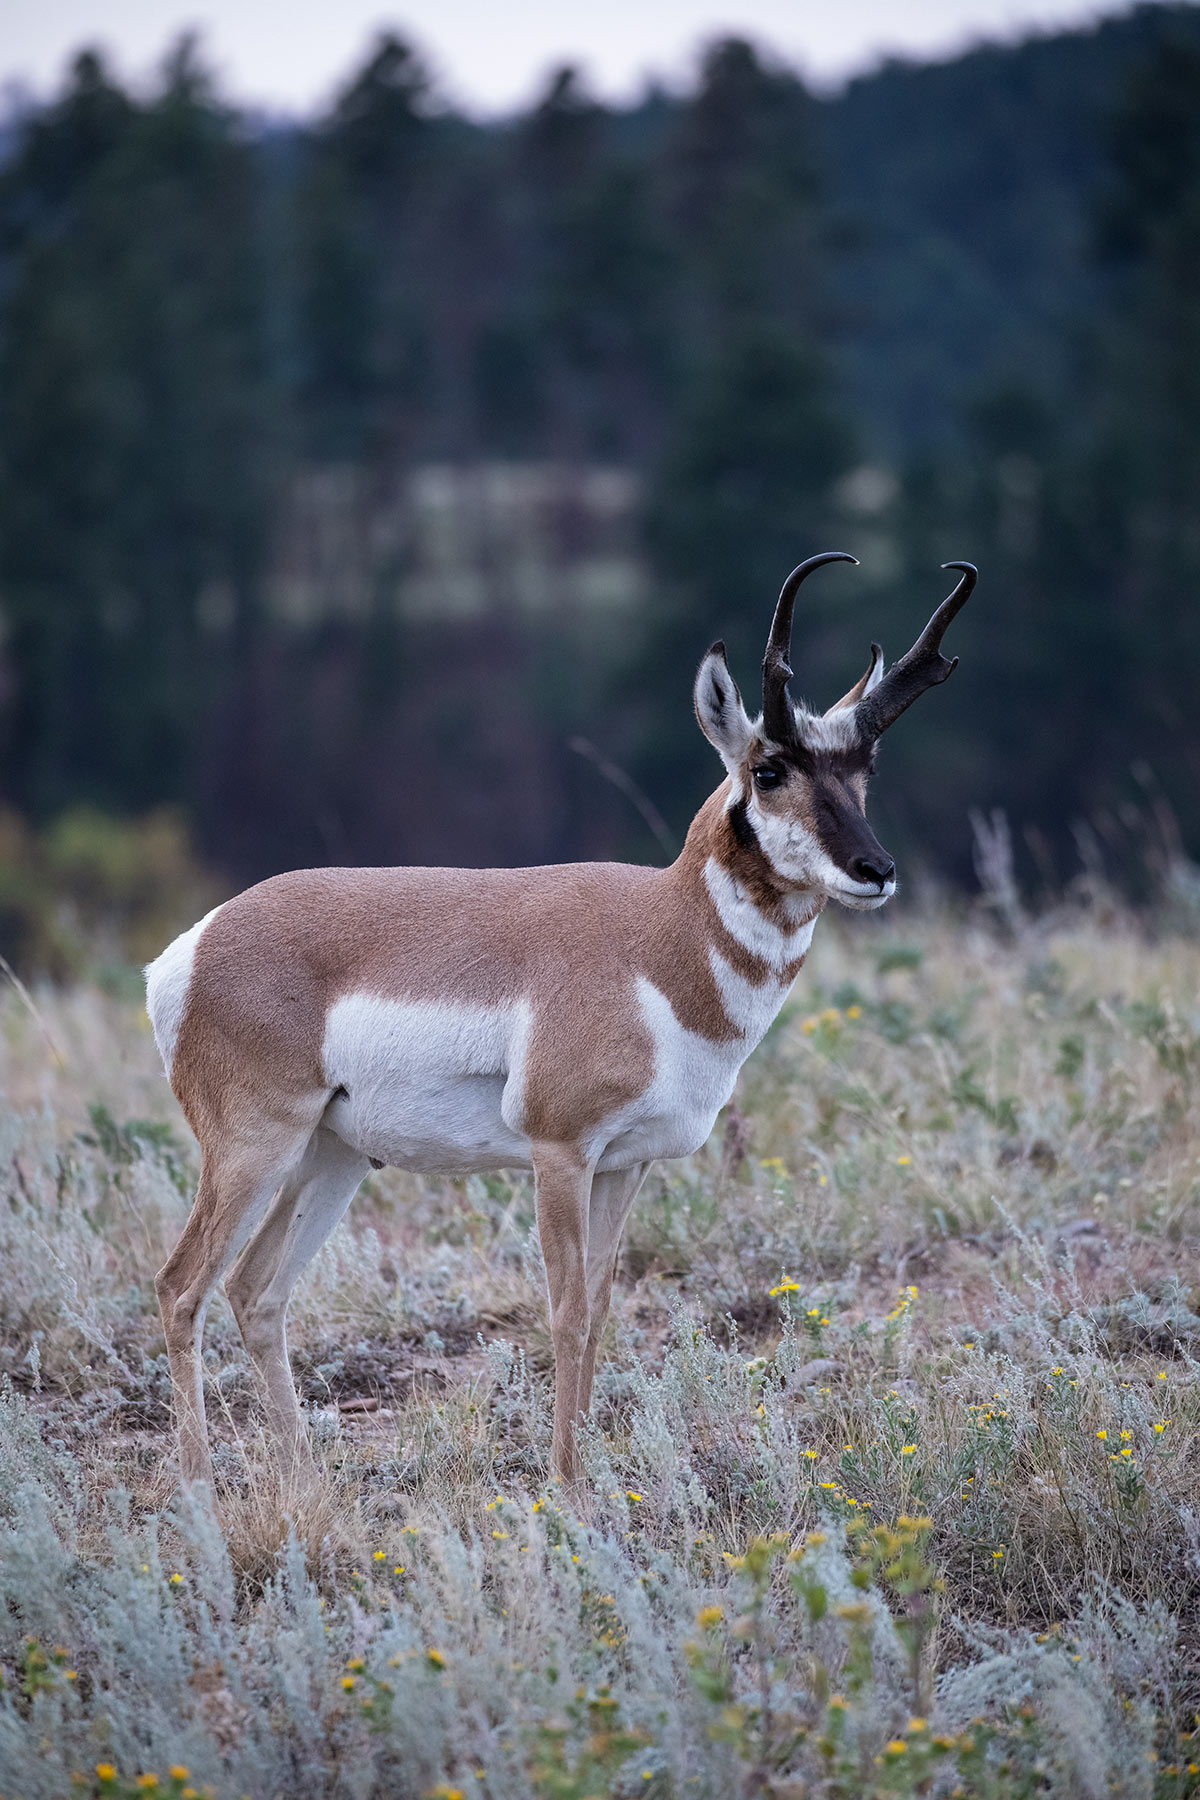 pronghorn antelope buck